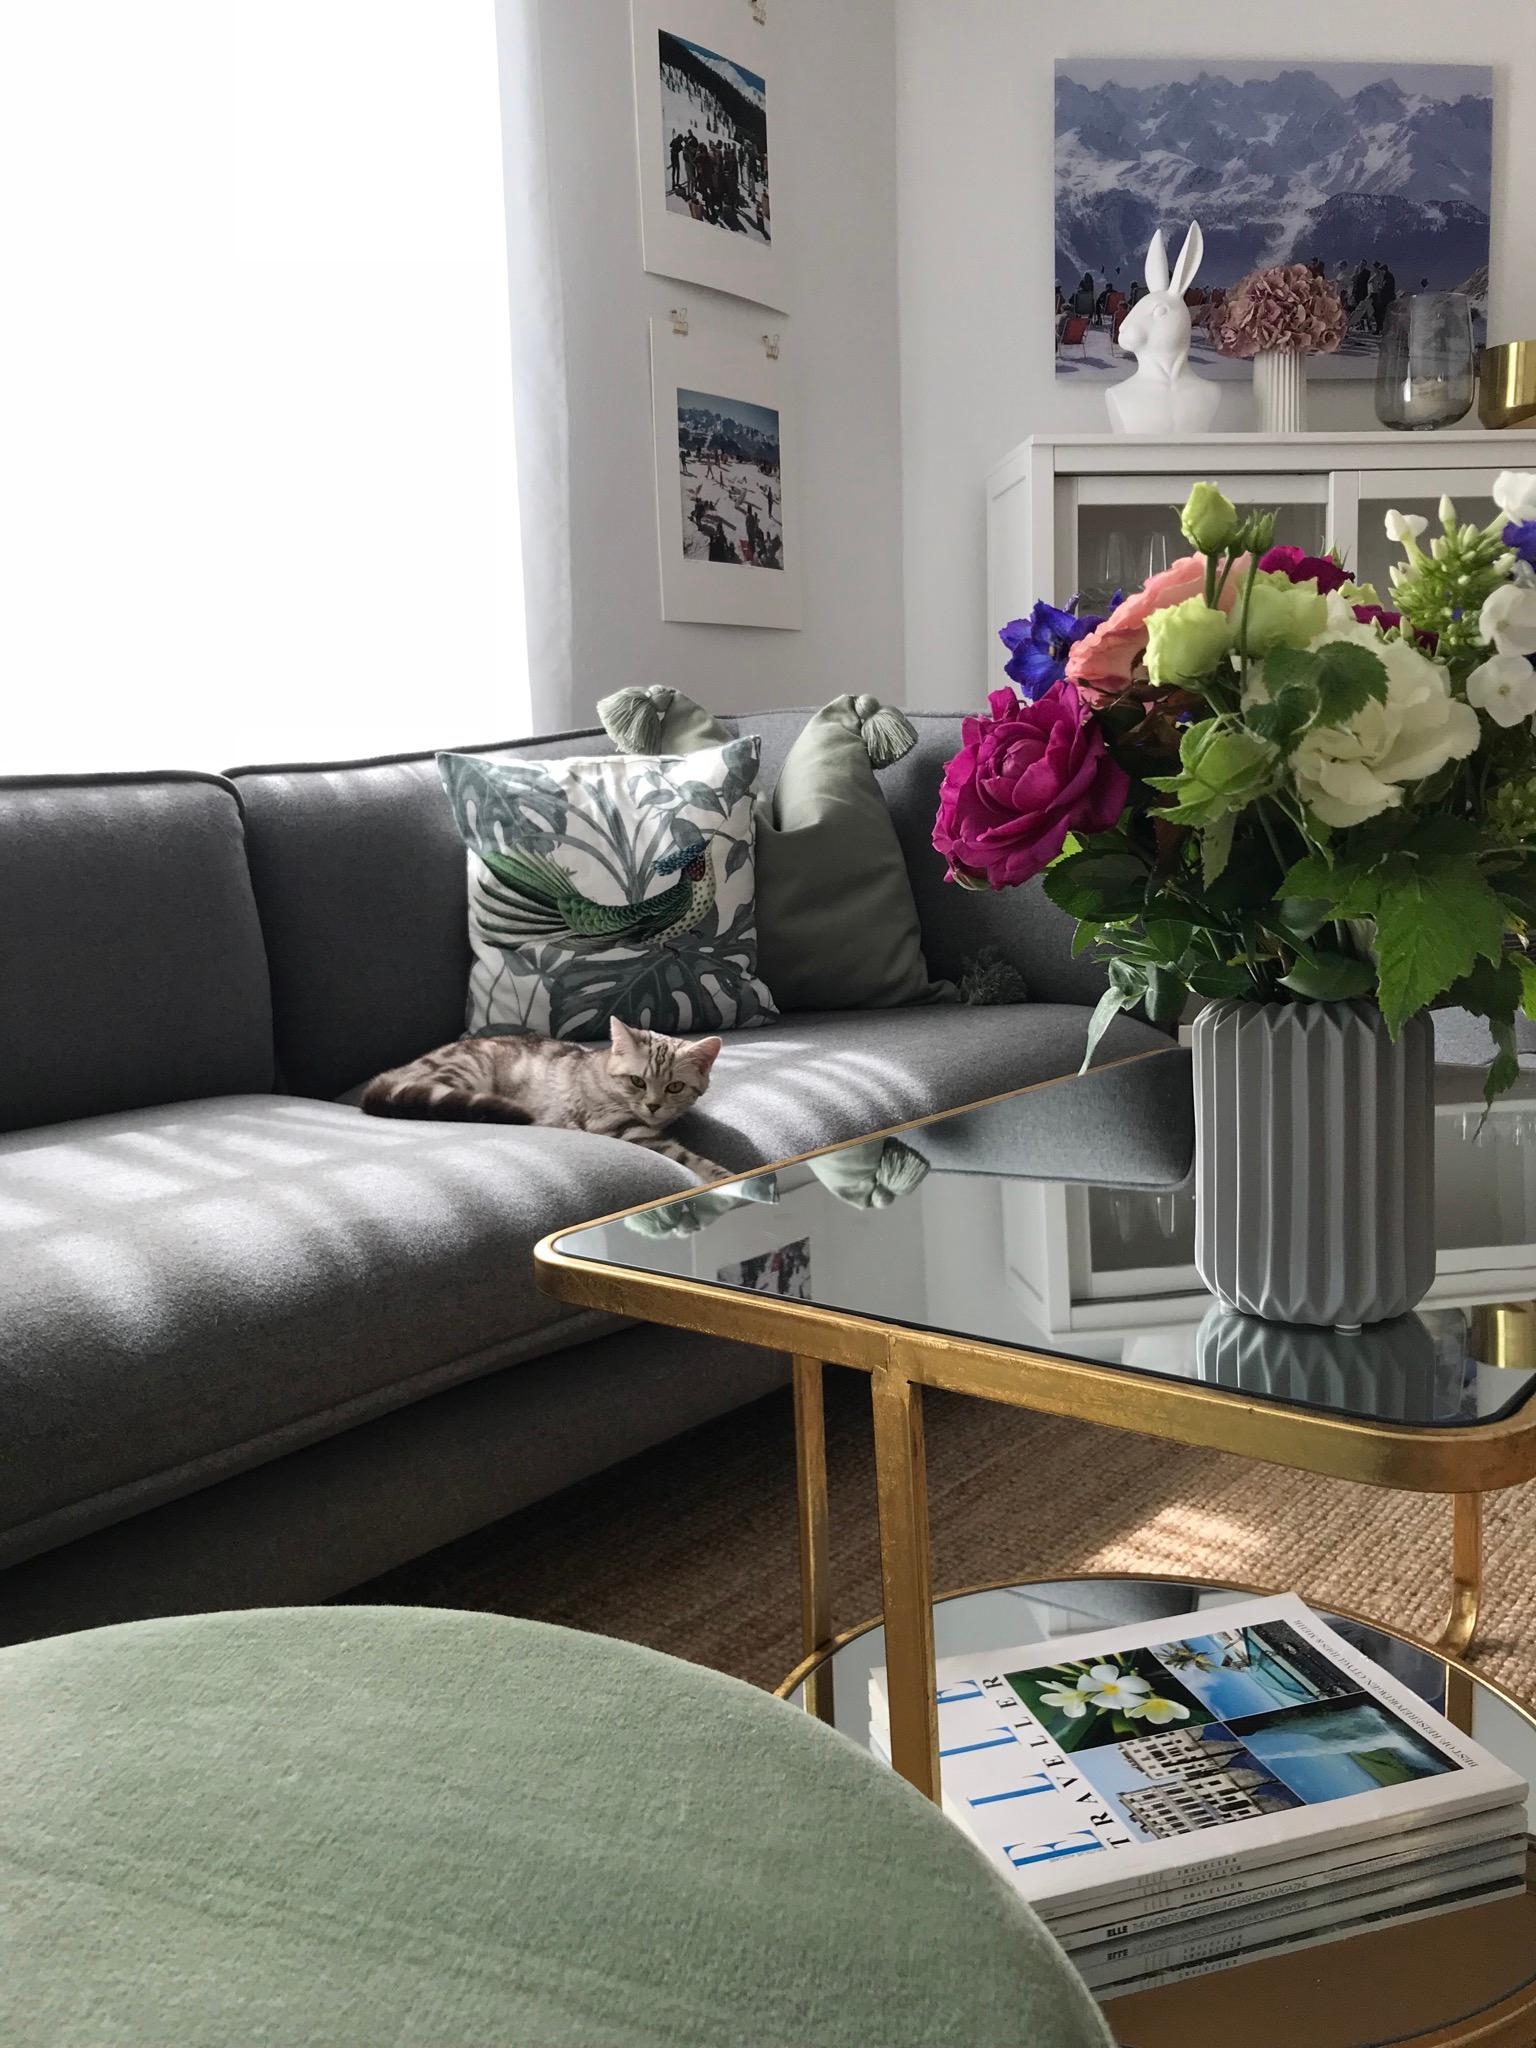 LET THE SUNSHINE IN 🌞

#couchstyle #kuschelecke #sonnescheint #details #lottithecat #flowers